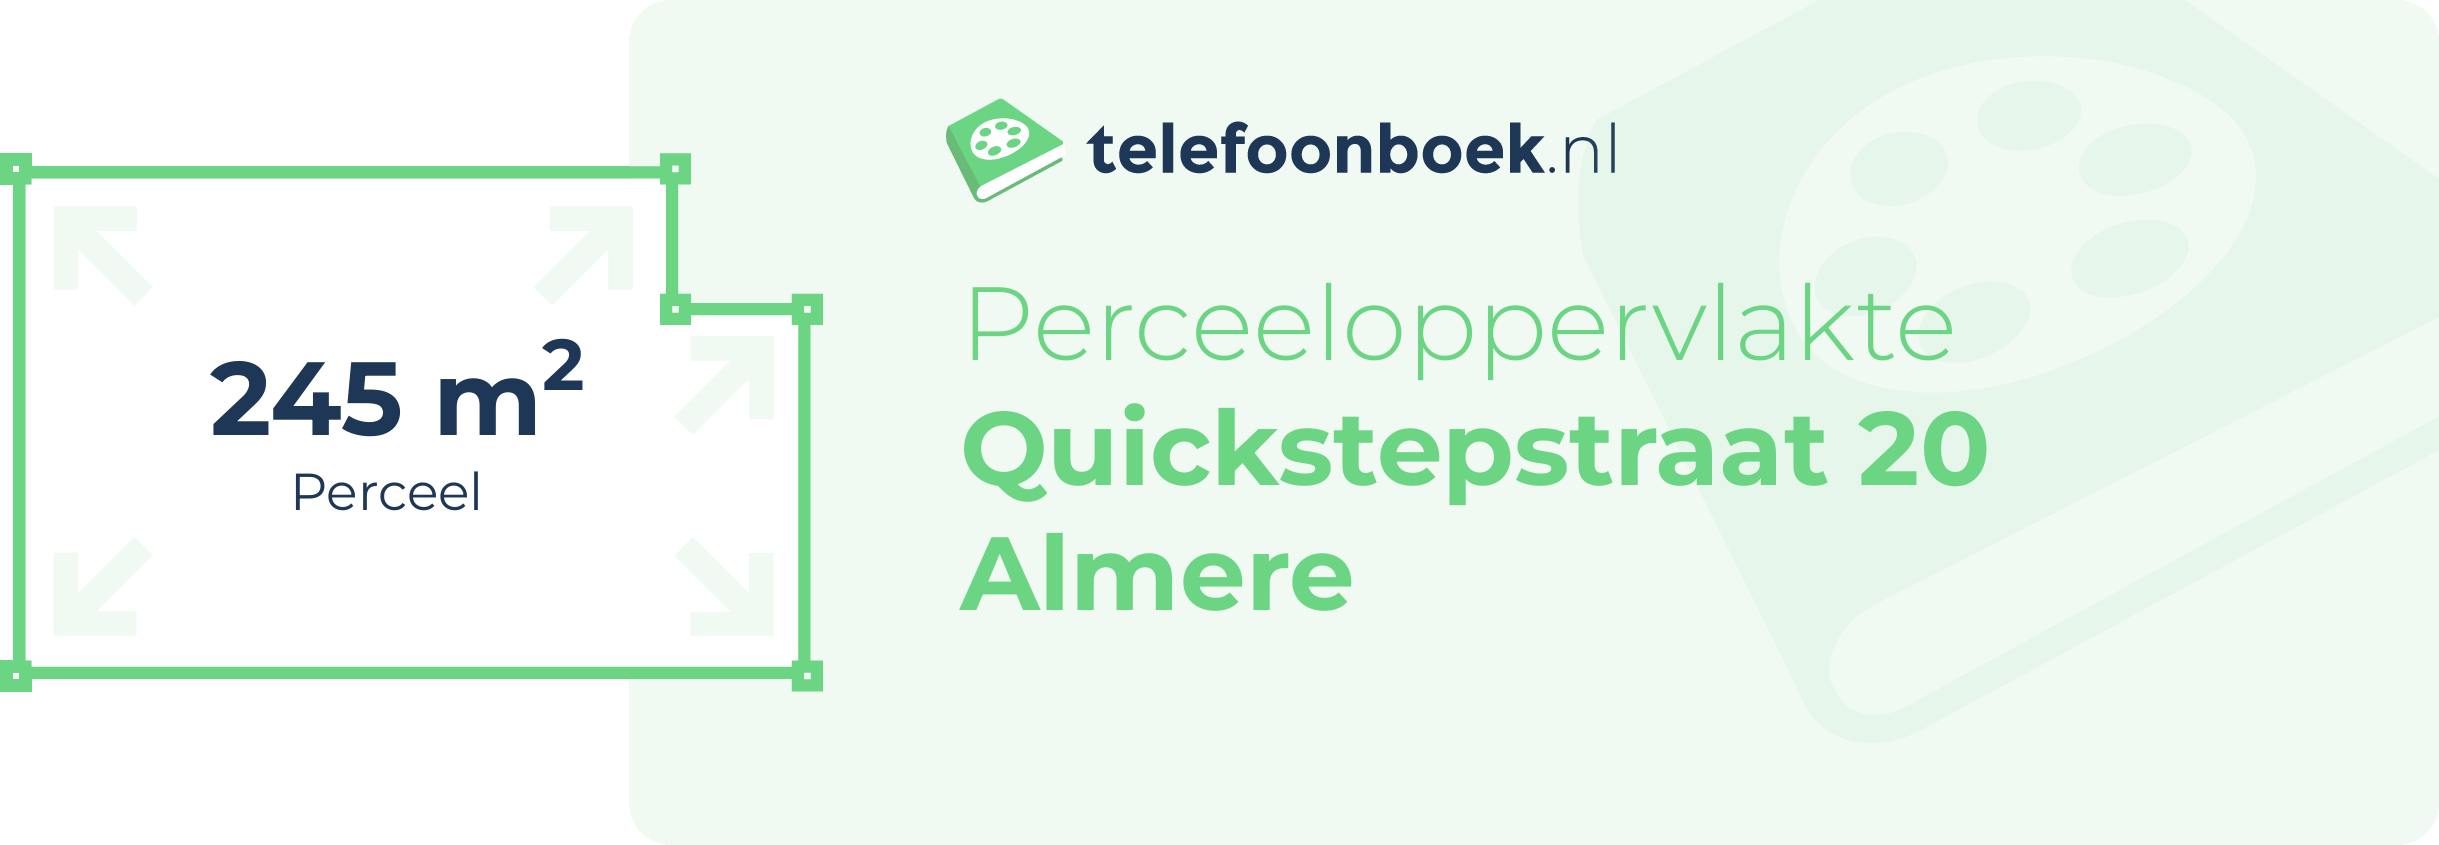 Perceeloppervlakte Quickstepstraat 20 Almere